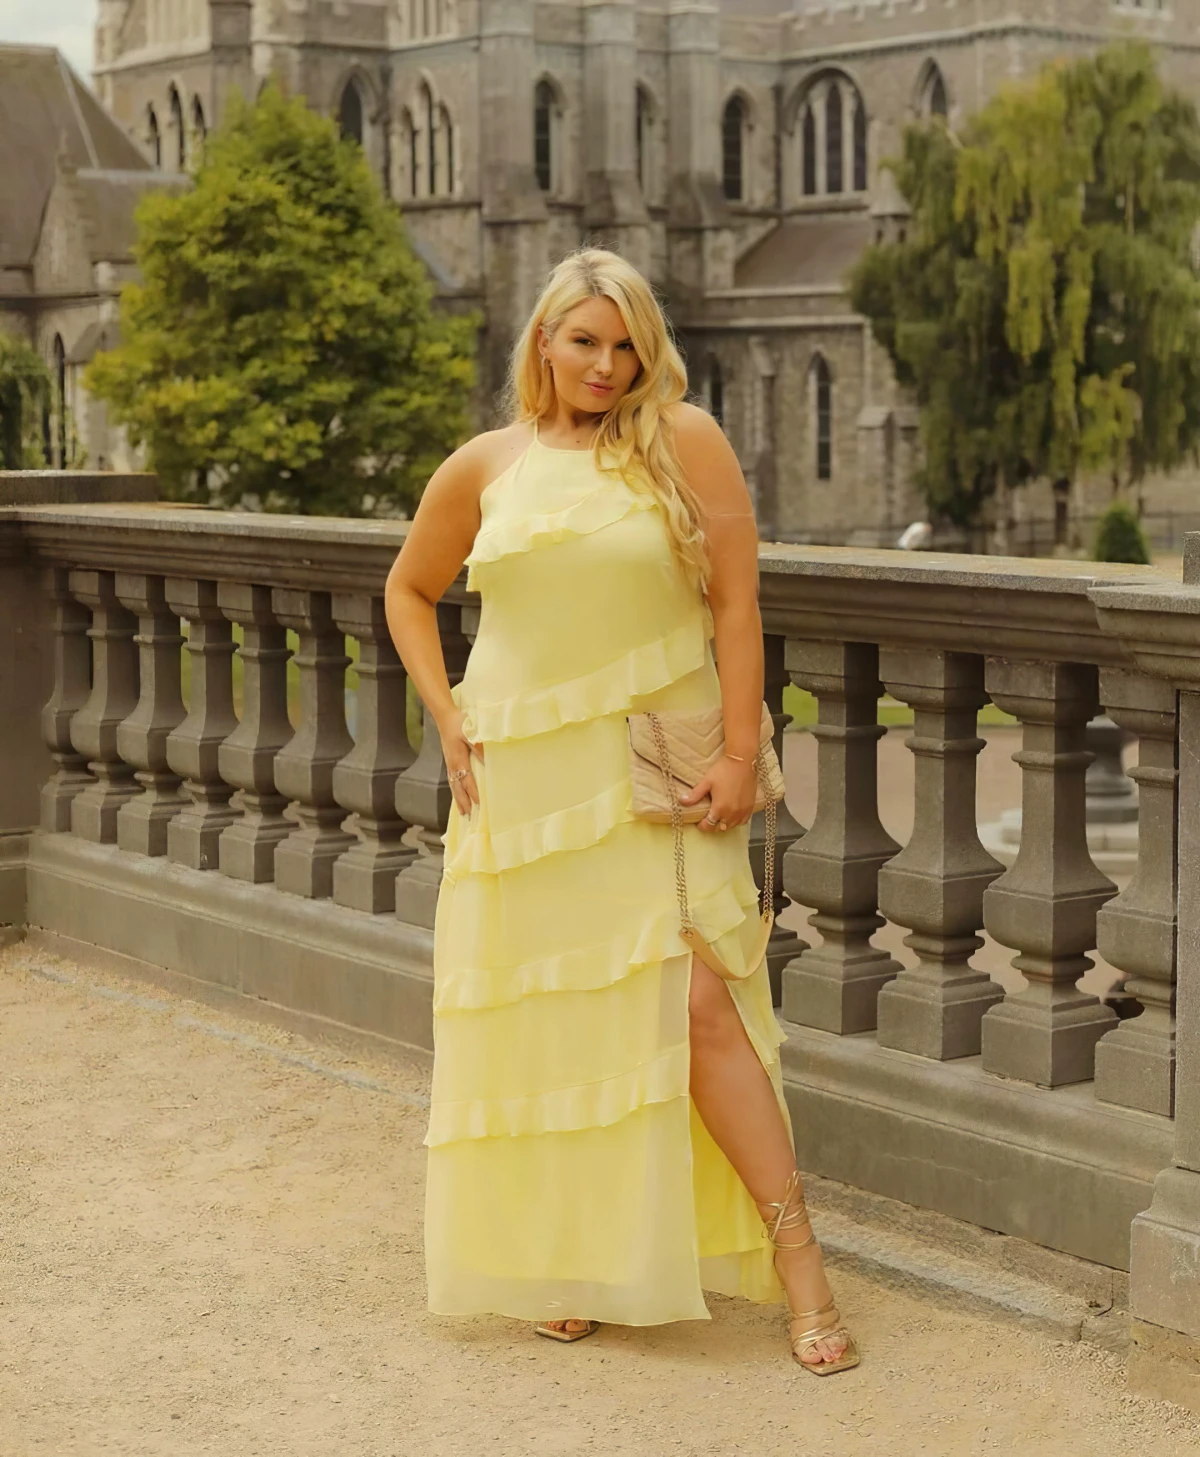 tenue de mariage femme ronde invitee femme blonde robe jaune